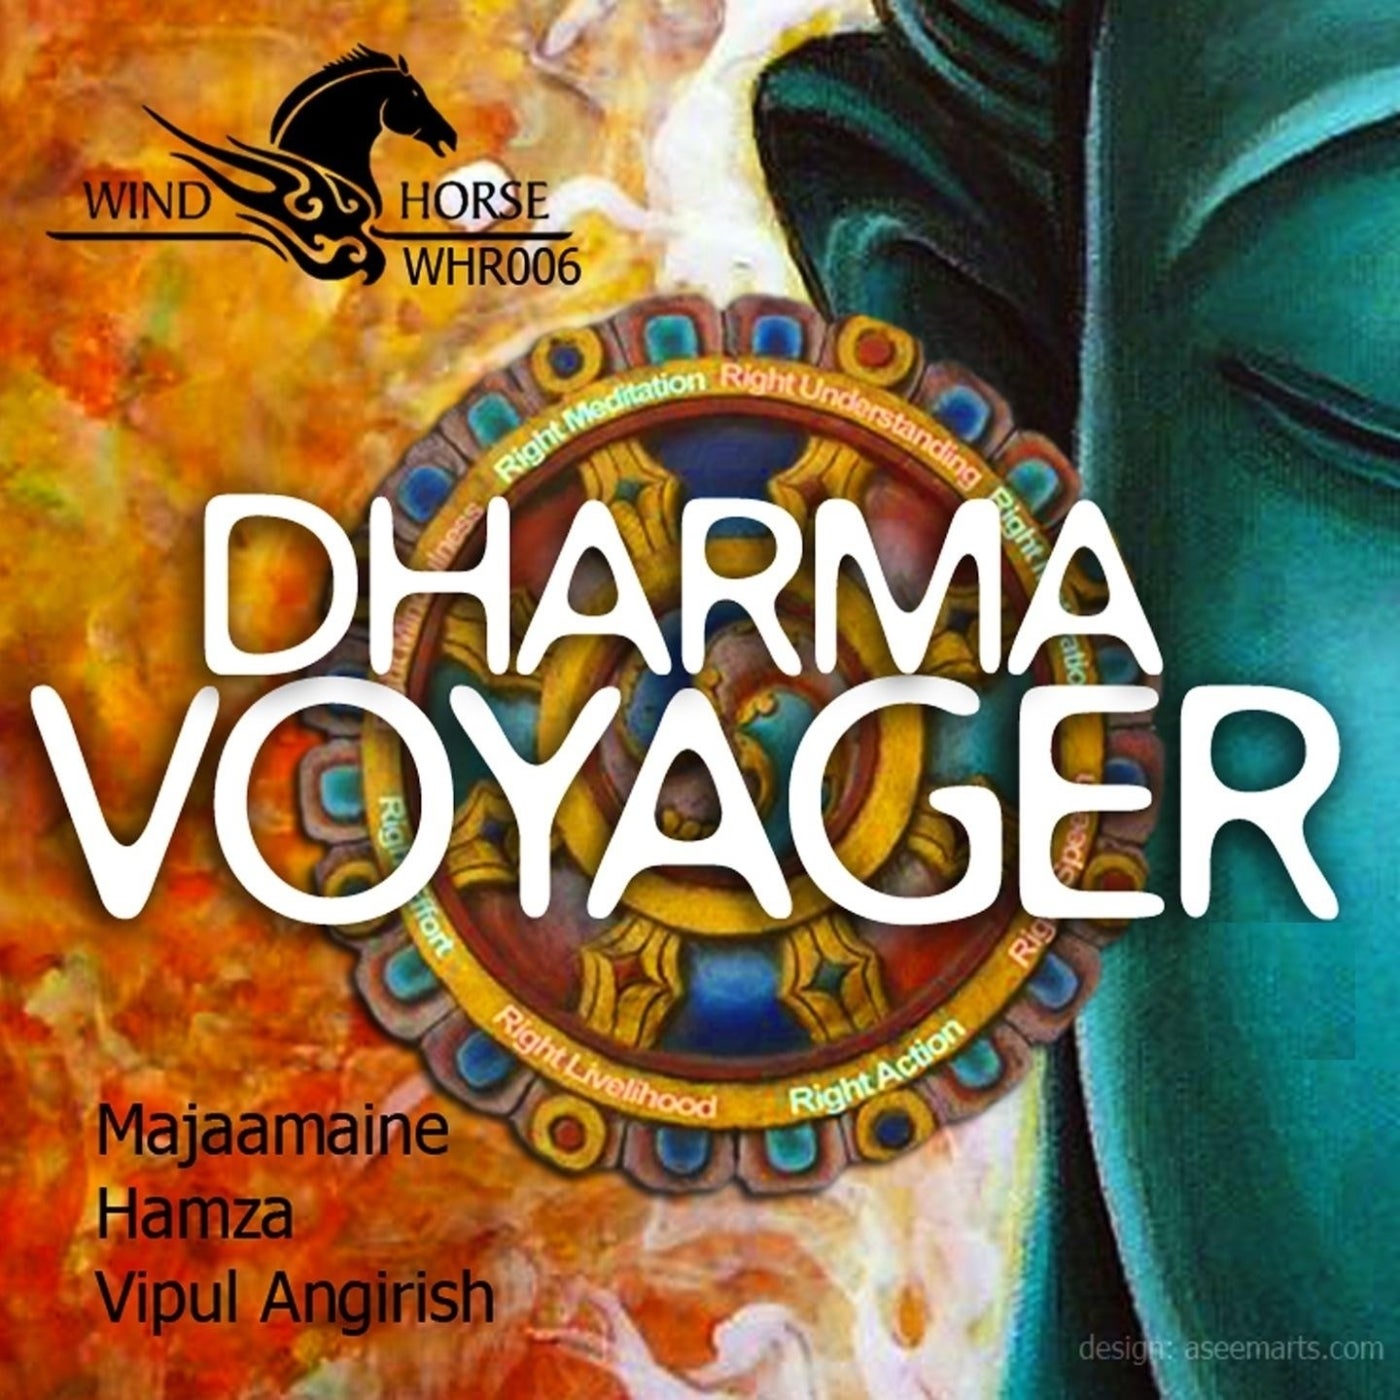 Dharma Voyager